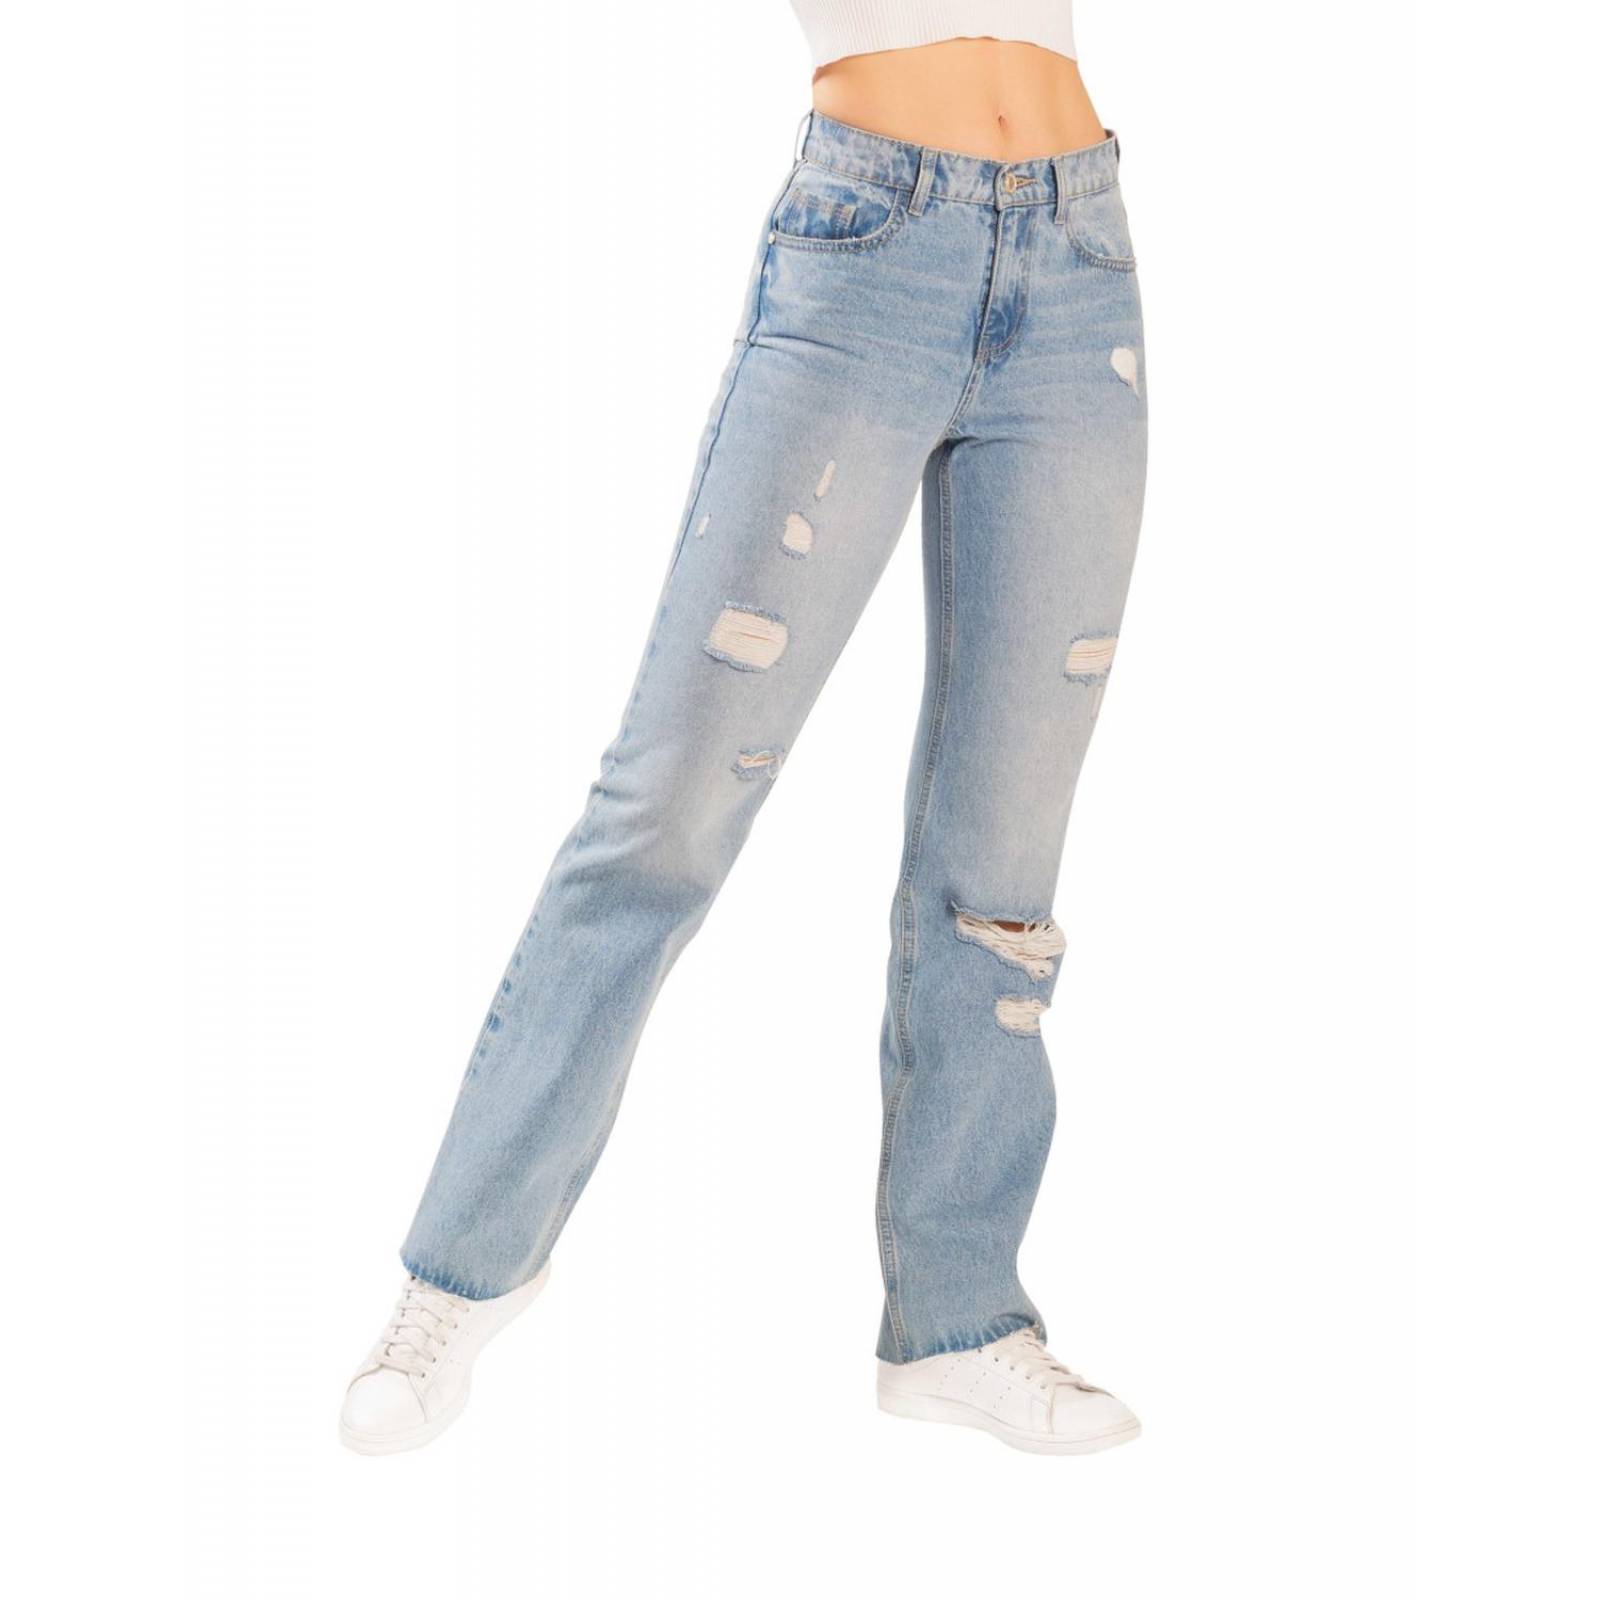 Wide leg jeanswest de tiro alto pantalon de moda 9445